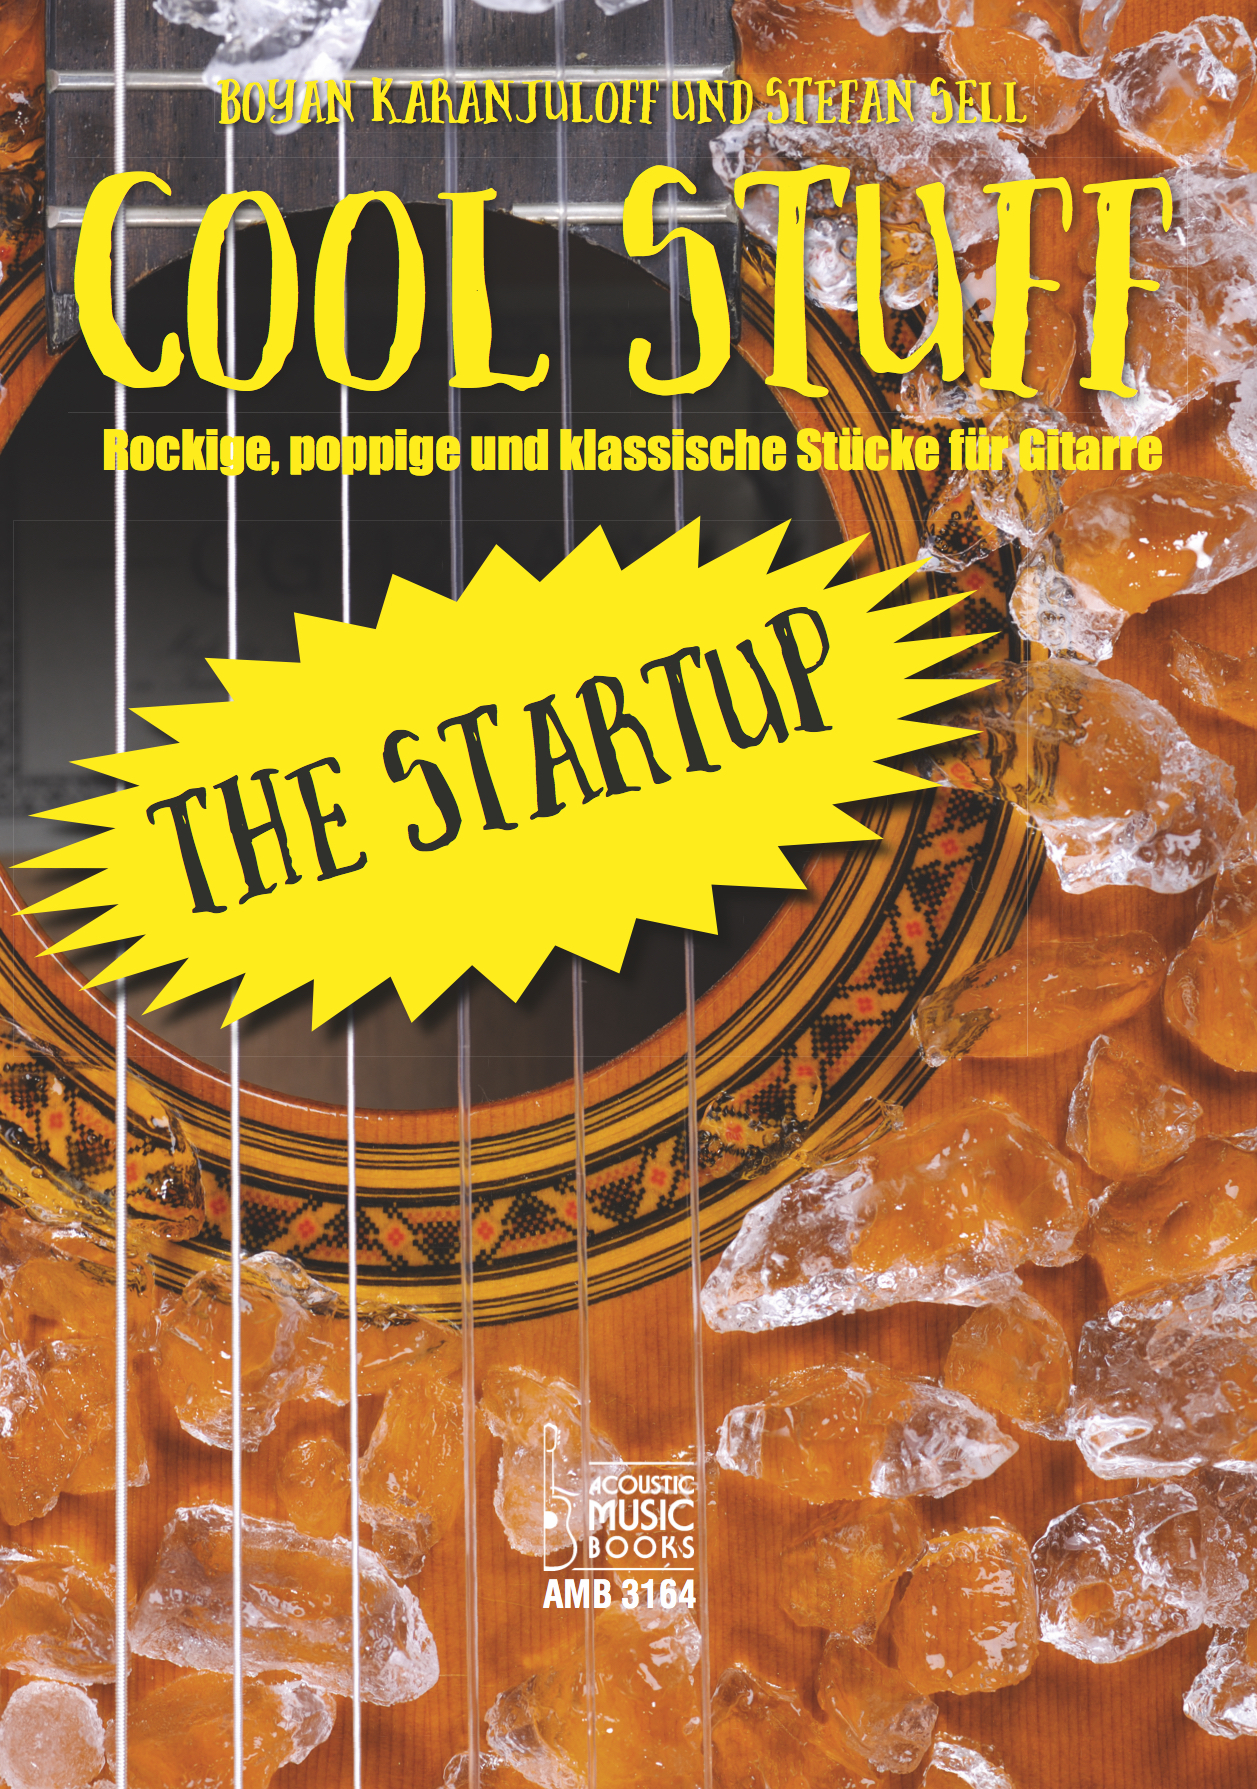 U1_Cool_Stuff_The_Startup